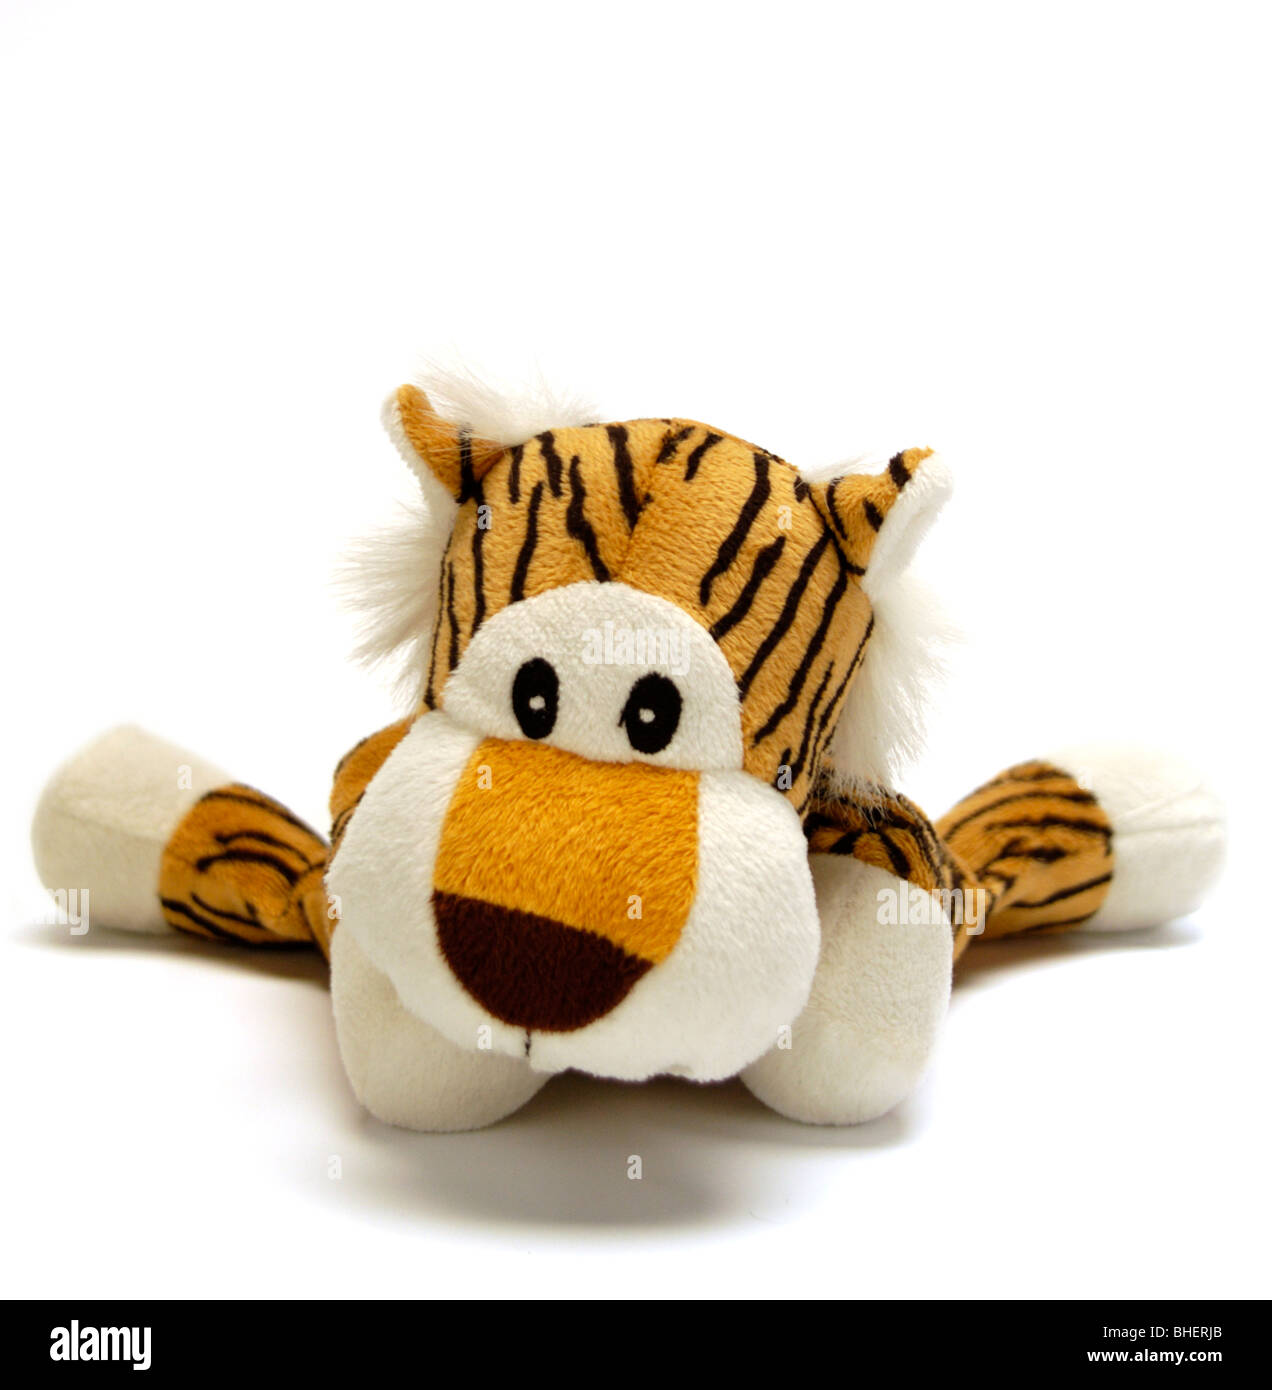 tiger beenie toy Stock Photo